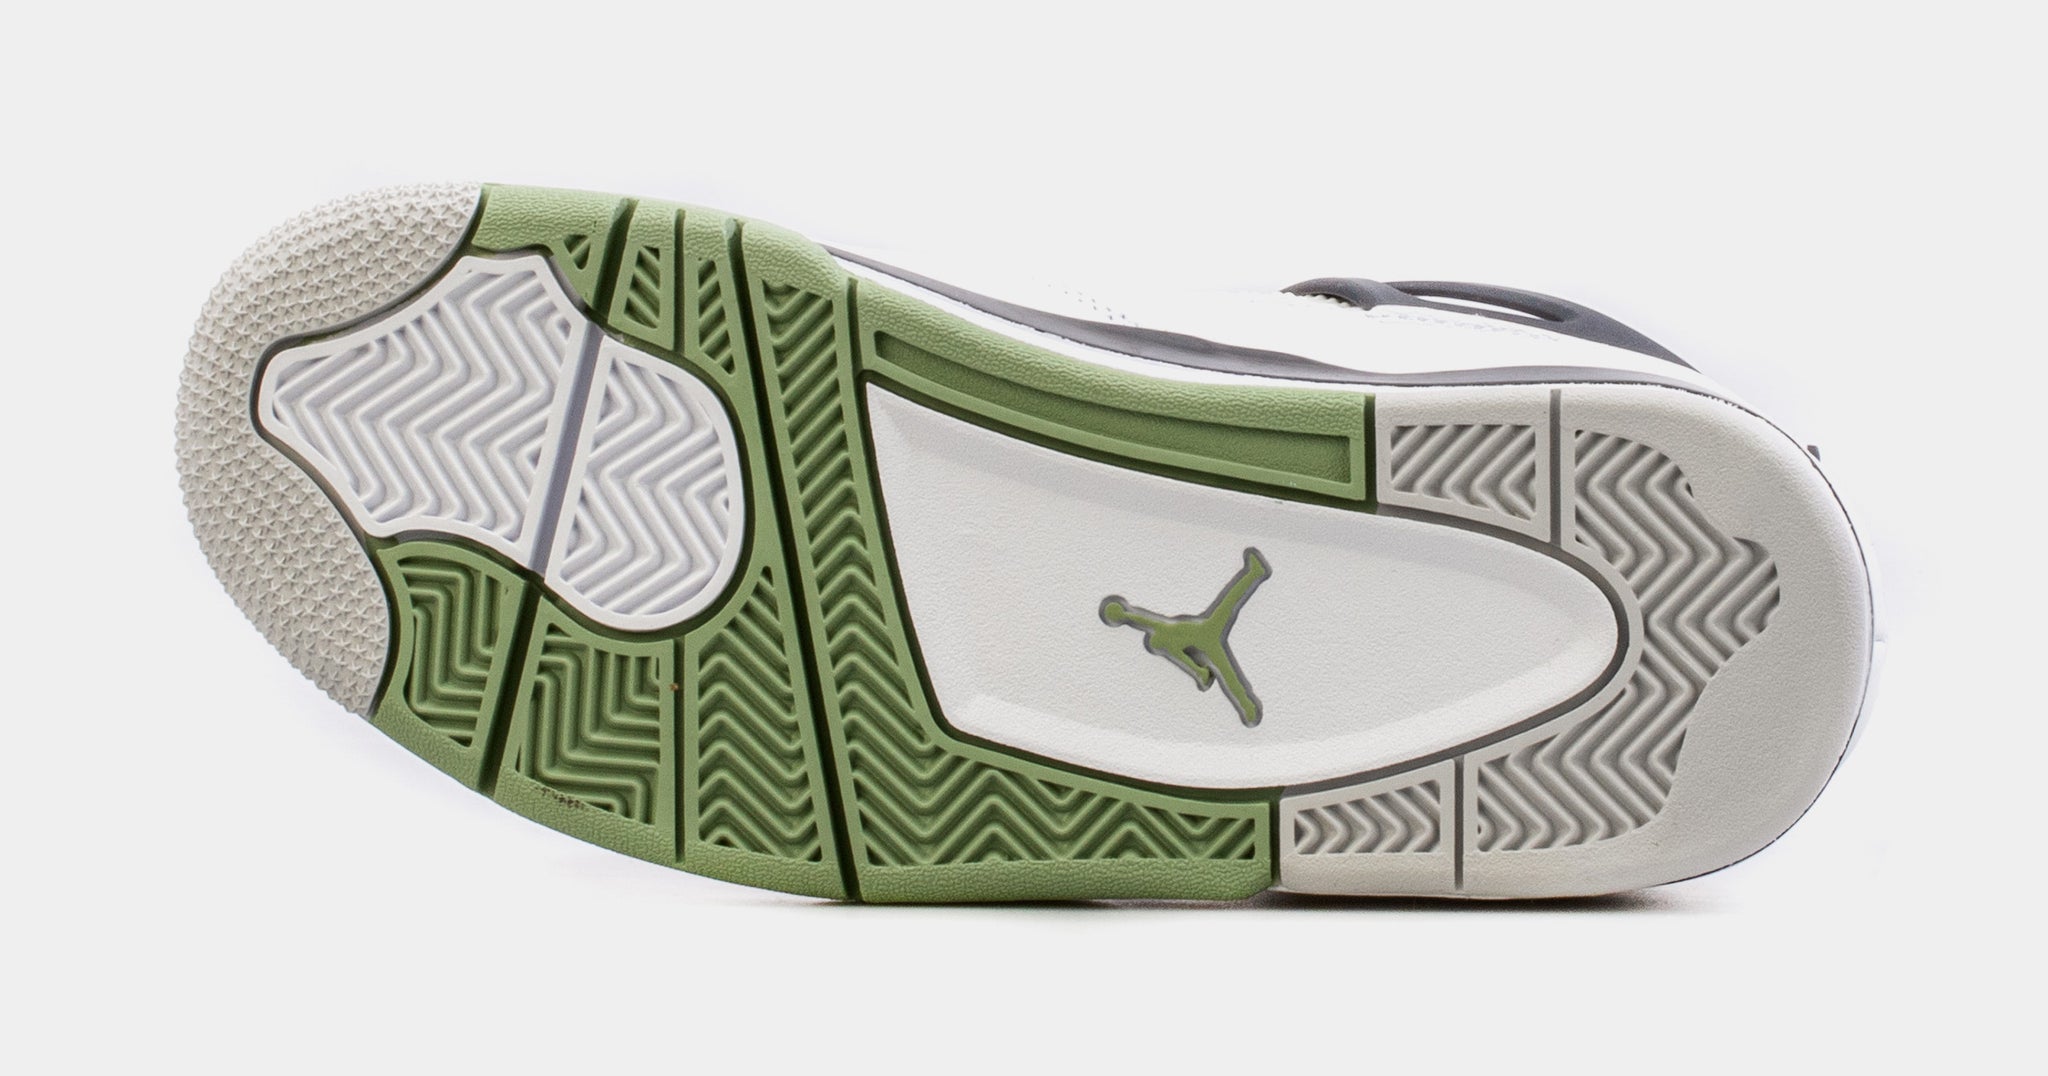 Nike Women's Air Jordan 4 Retro Shoes Seafoam Green White